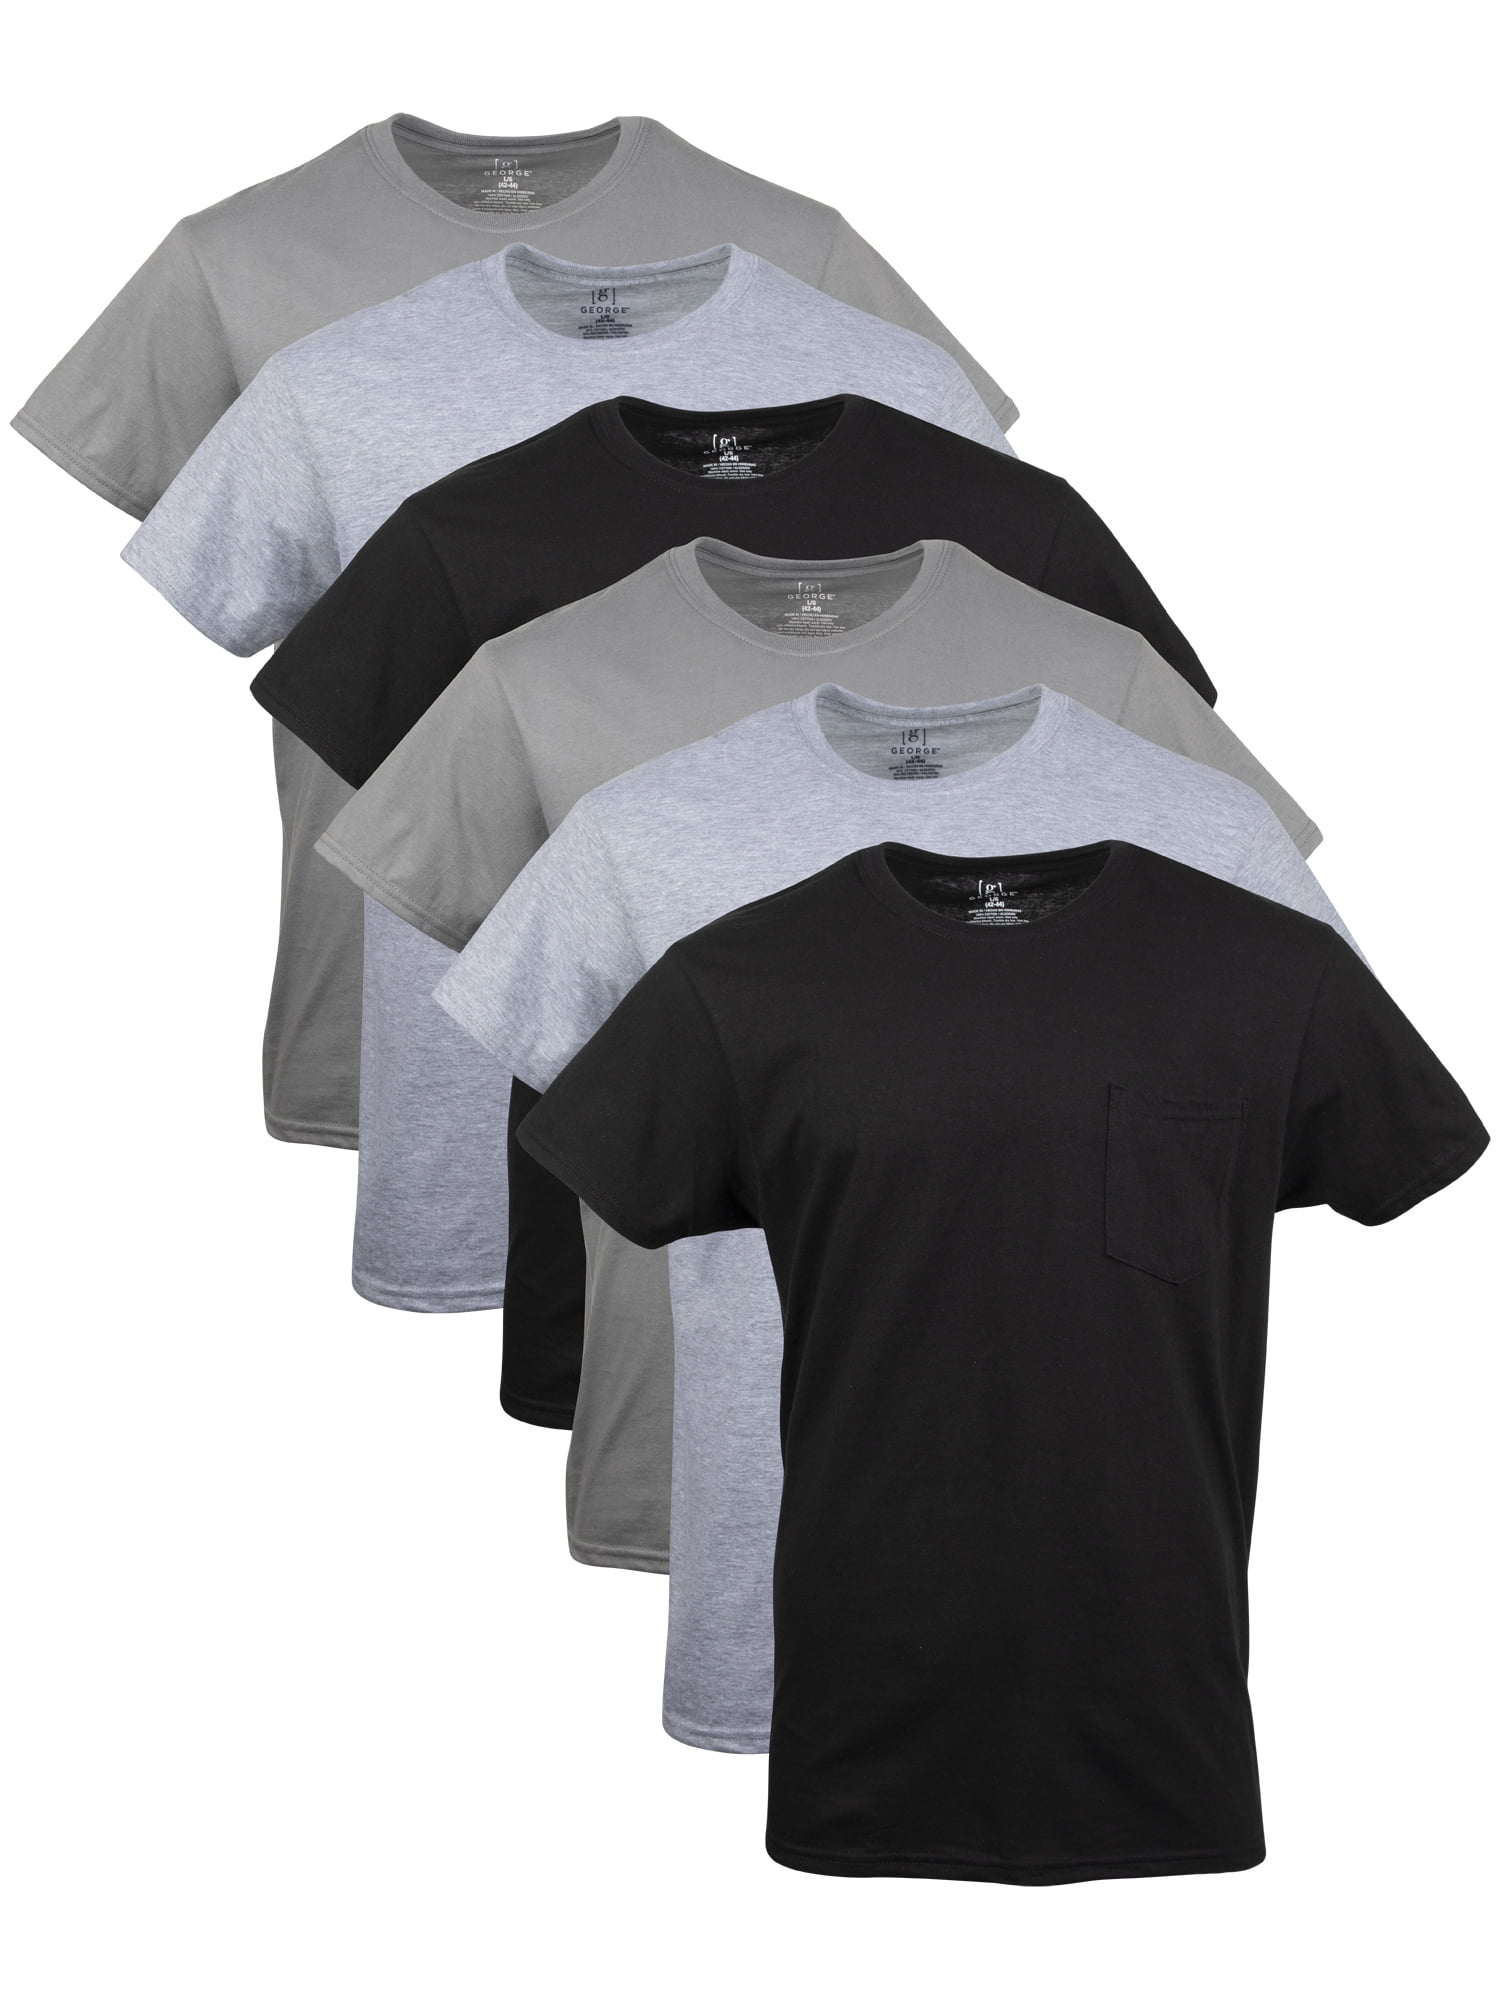 George Men's Pocket T-Shirts, 6-Pack - Walmart.com